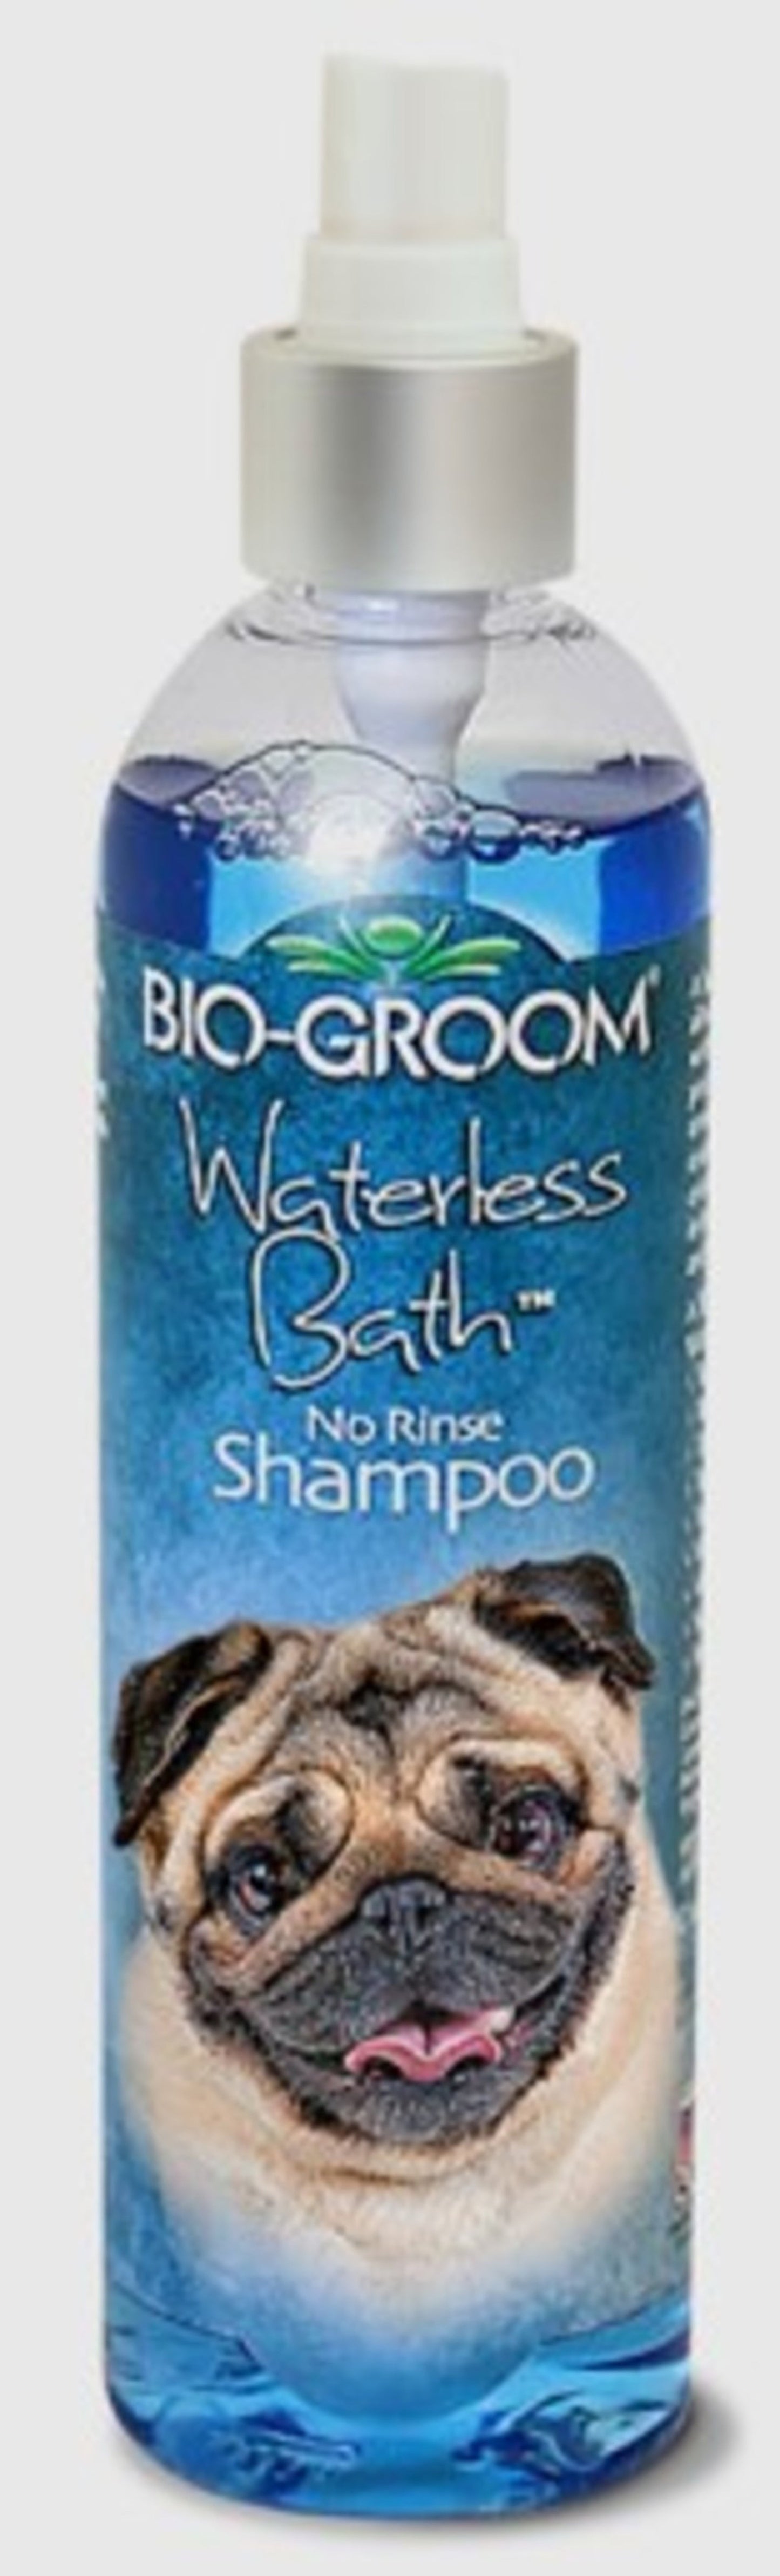 Bio Groom Waterless Bath No Rinse Shampoo 1ea/8 fl oz